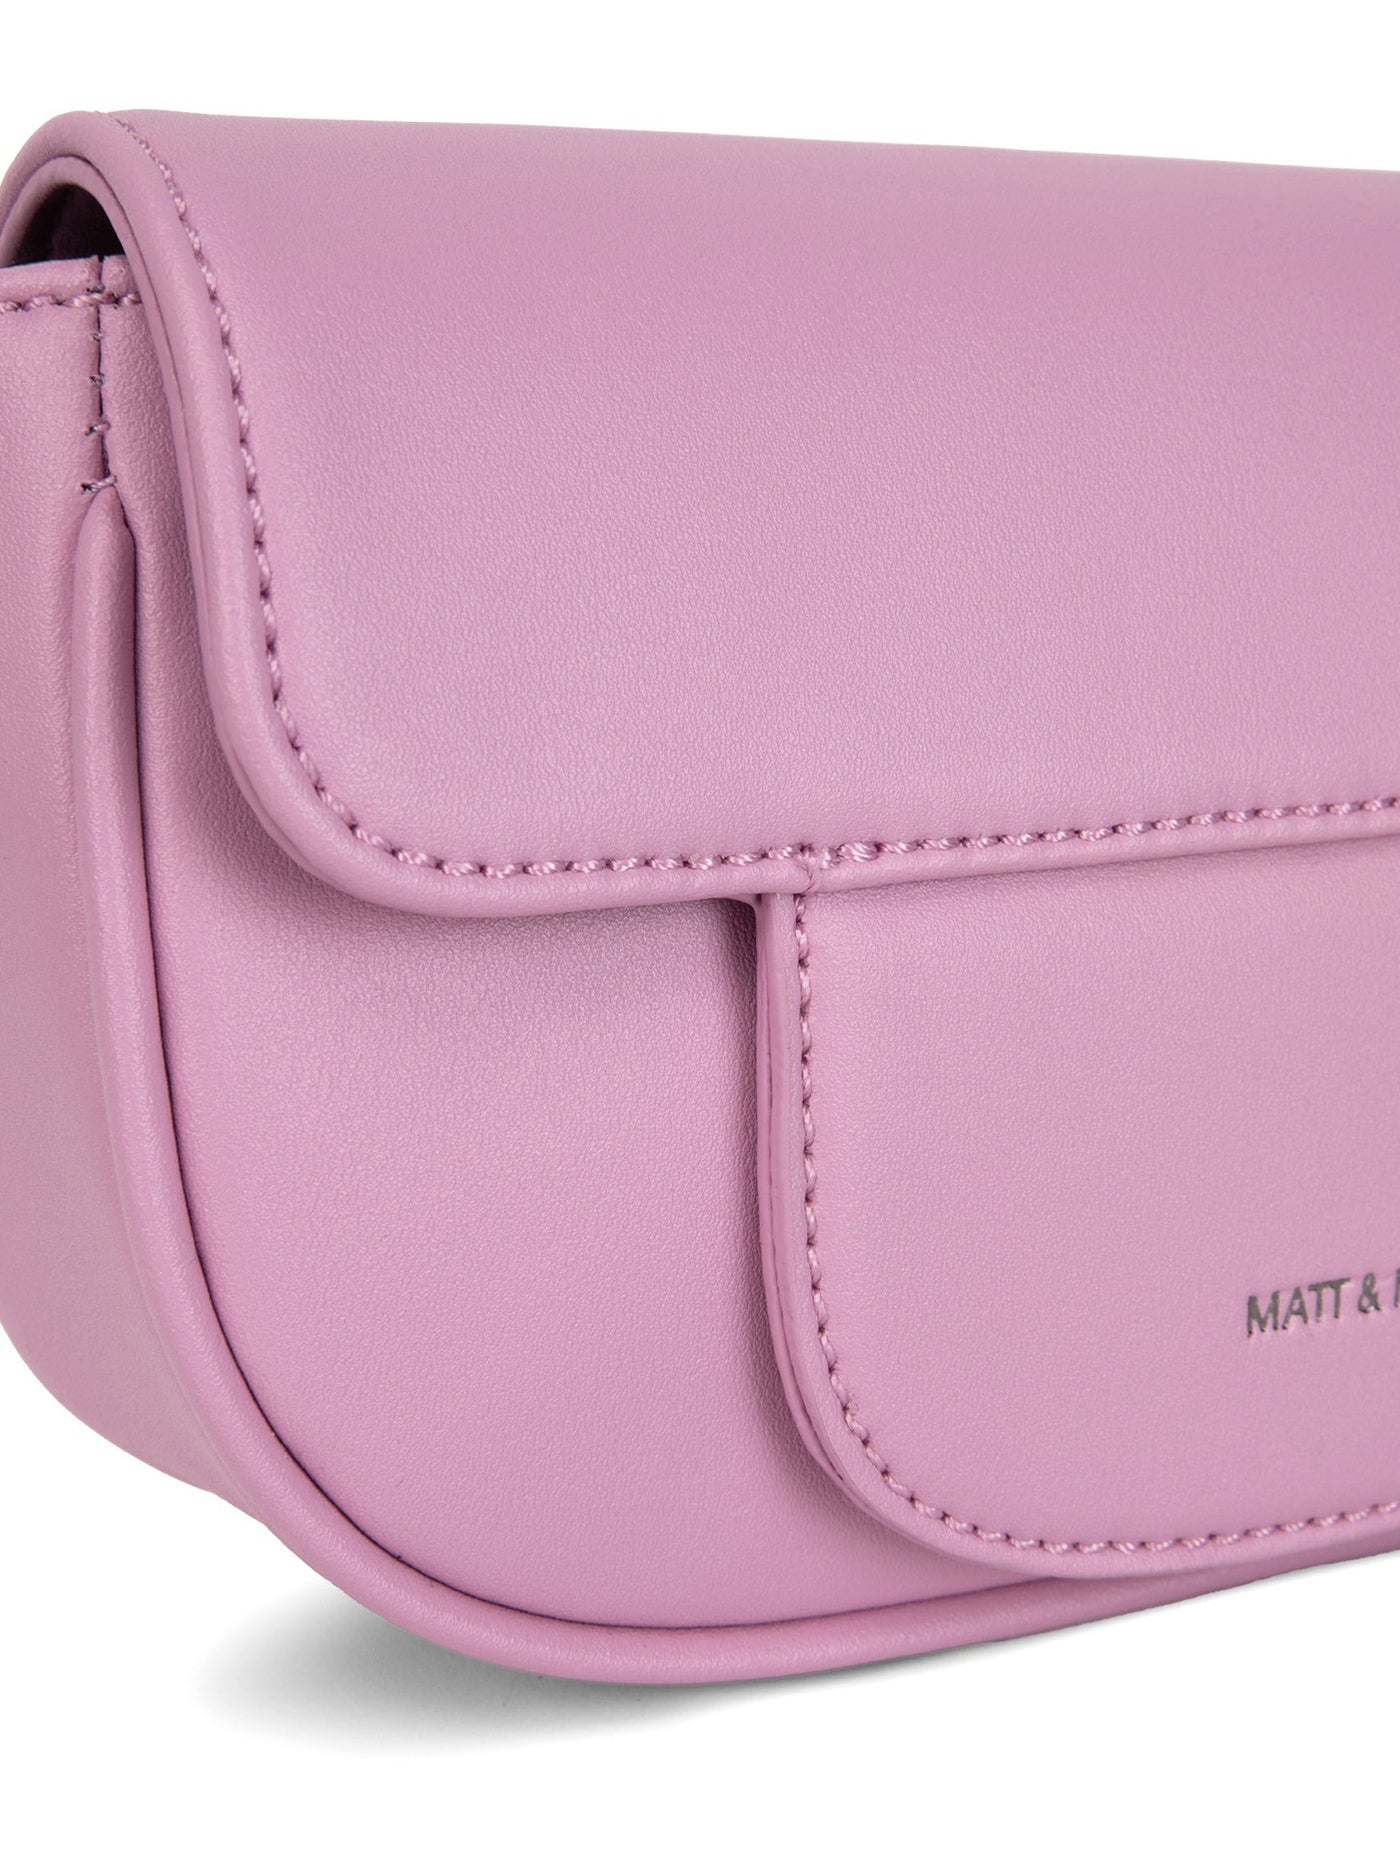 Matt & Nat Haiti Sol Collection Women Handbag